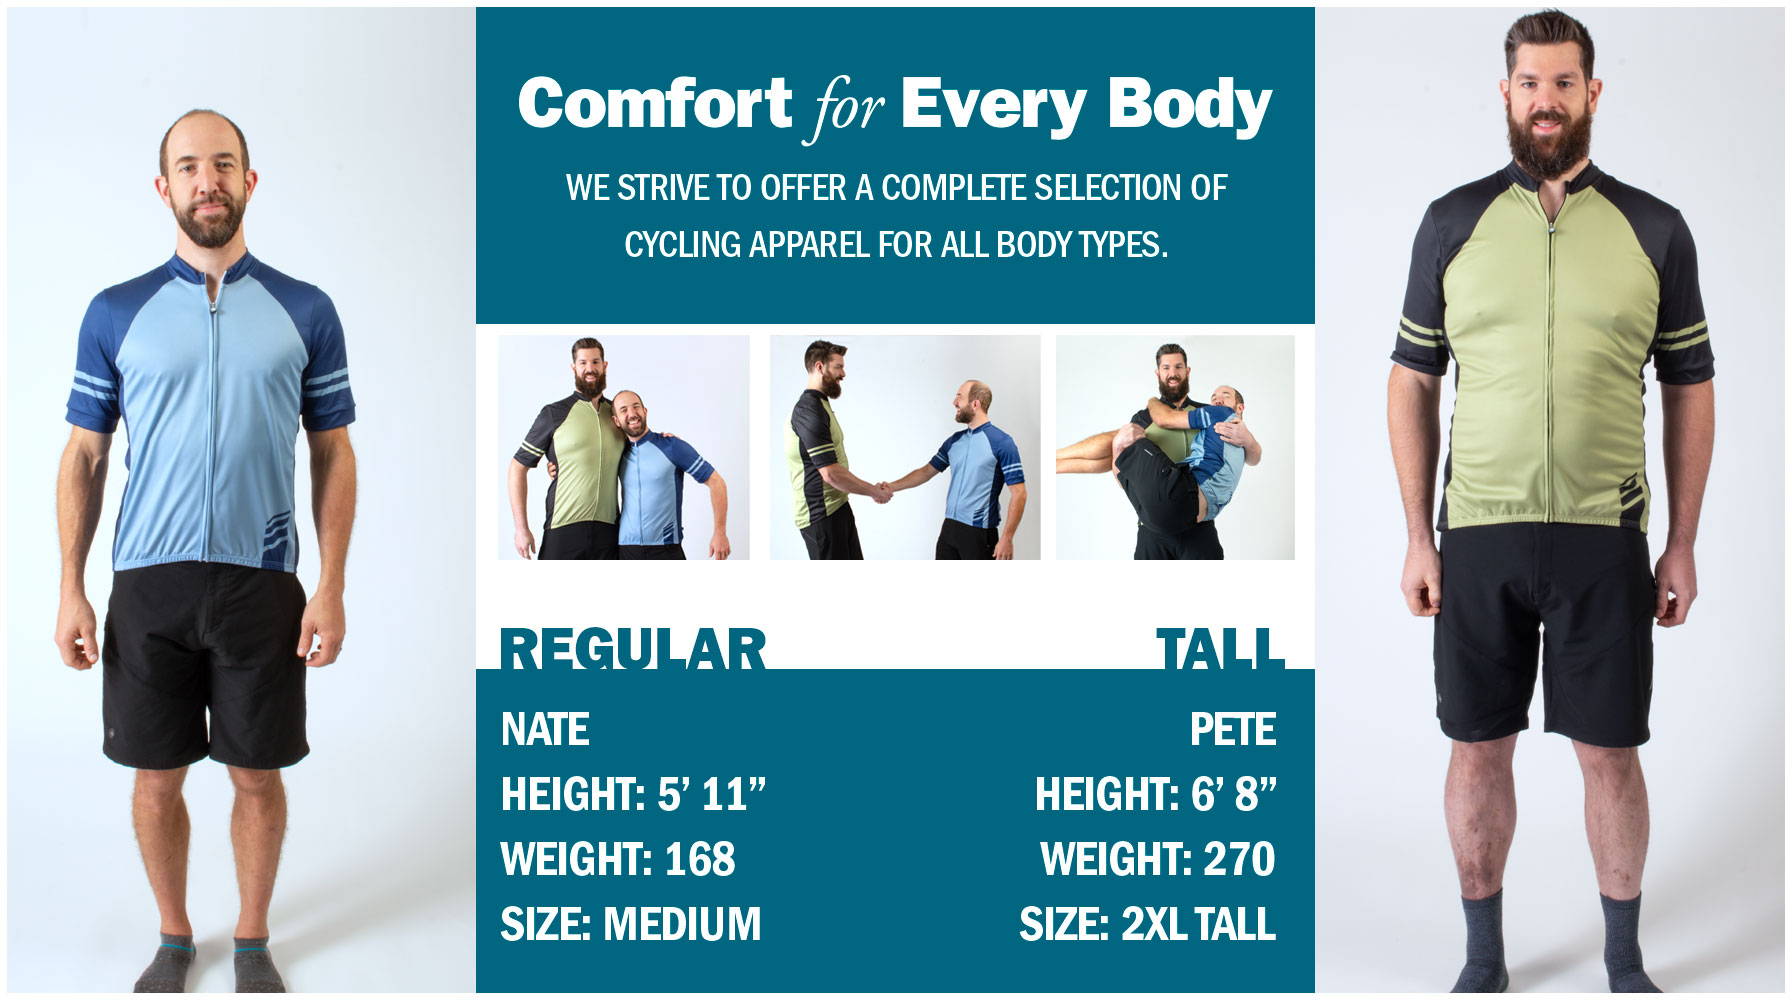 Big man vs regular size comparison